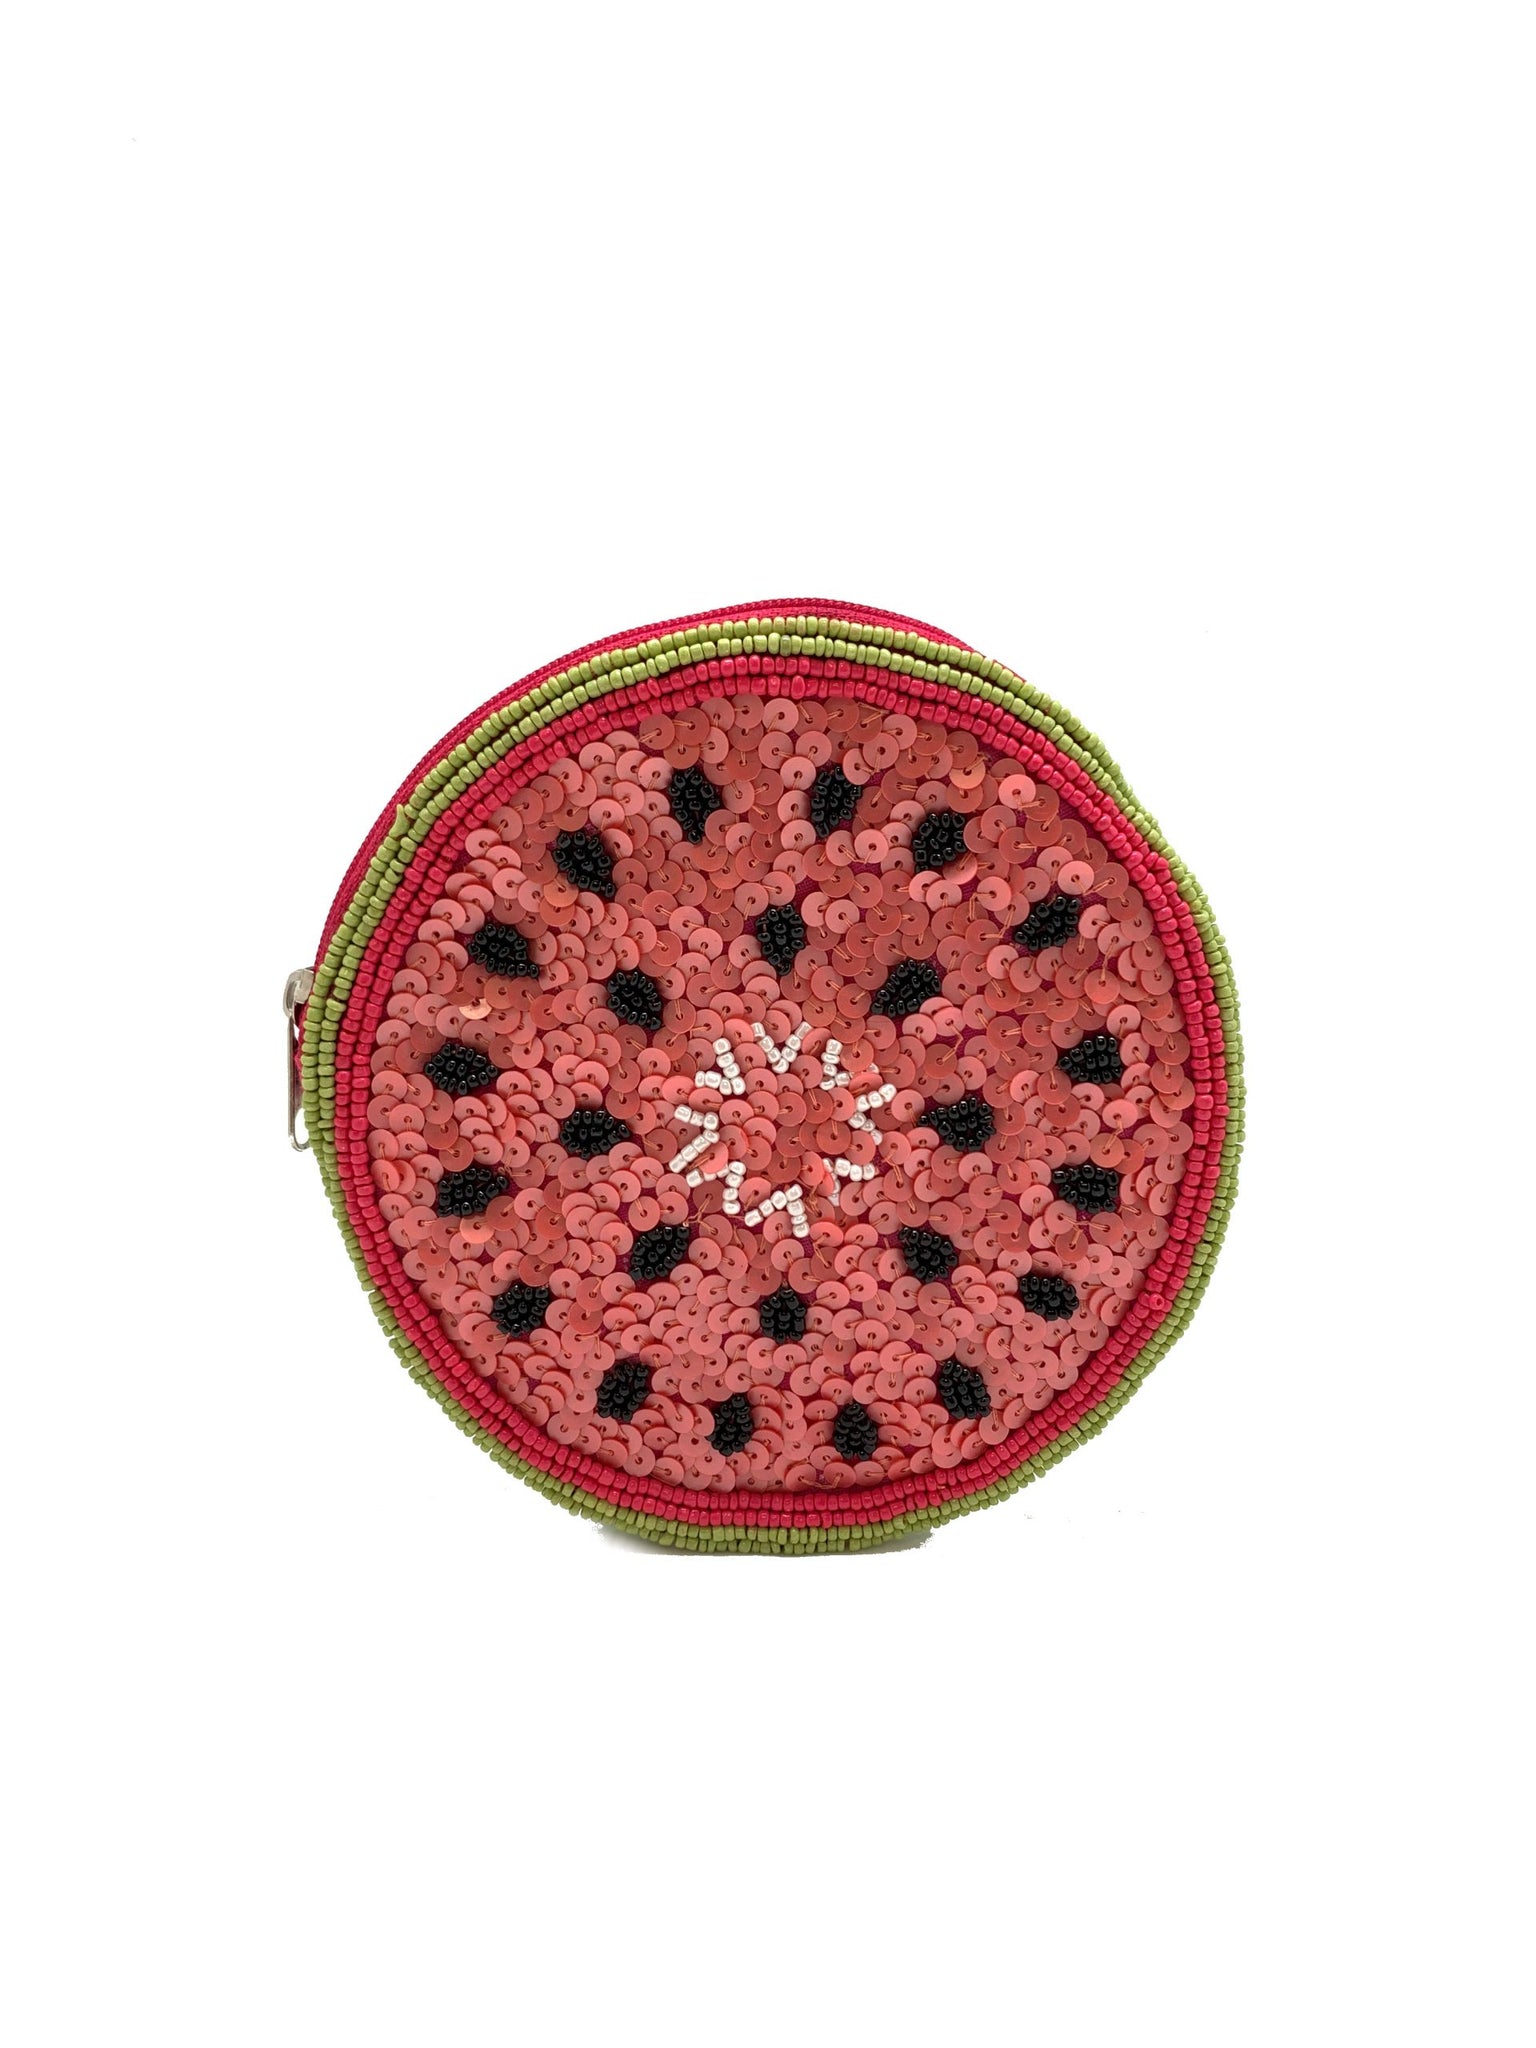 Ravelry: Watermelon coin purse pattern by Fabiana Canu